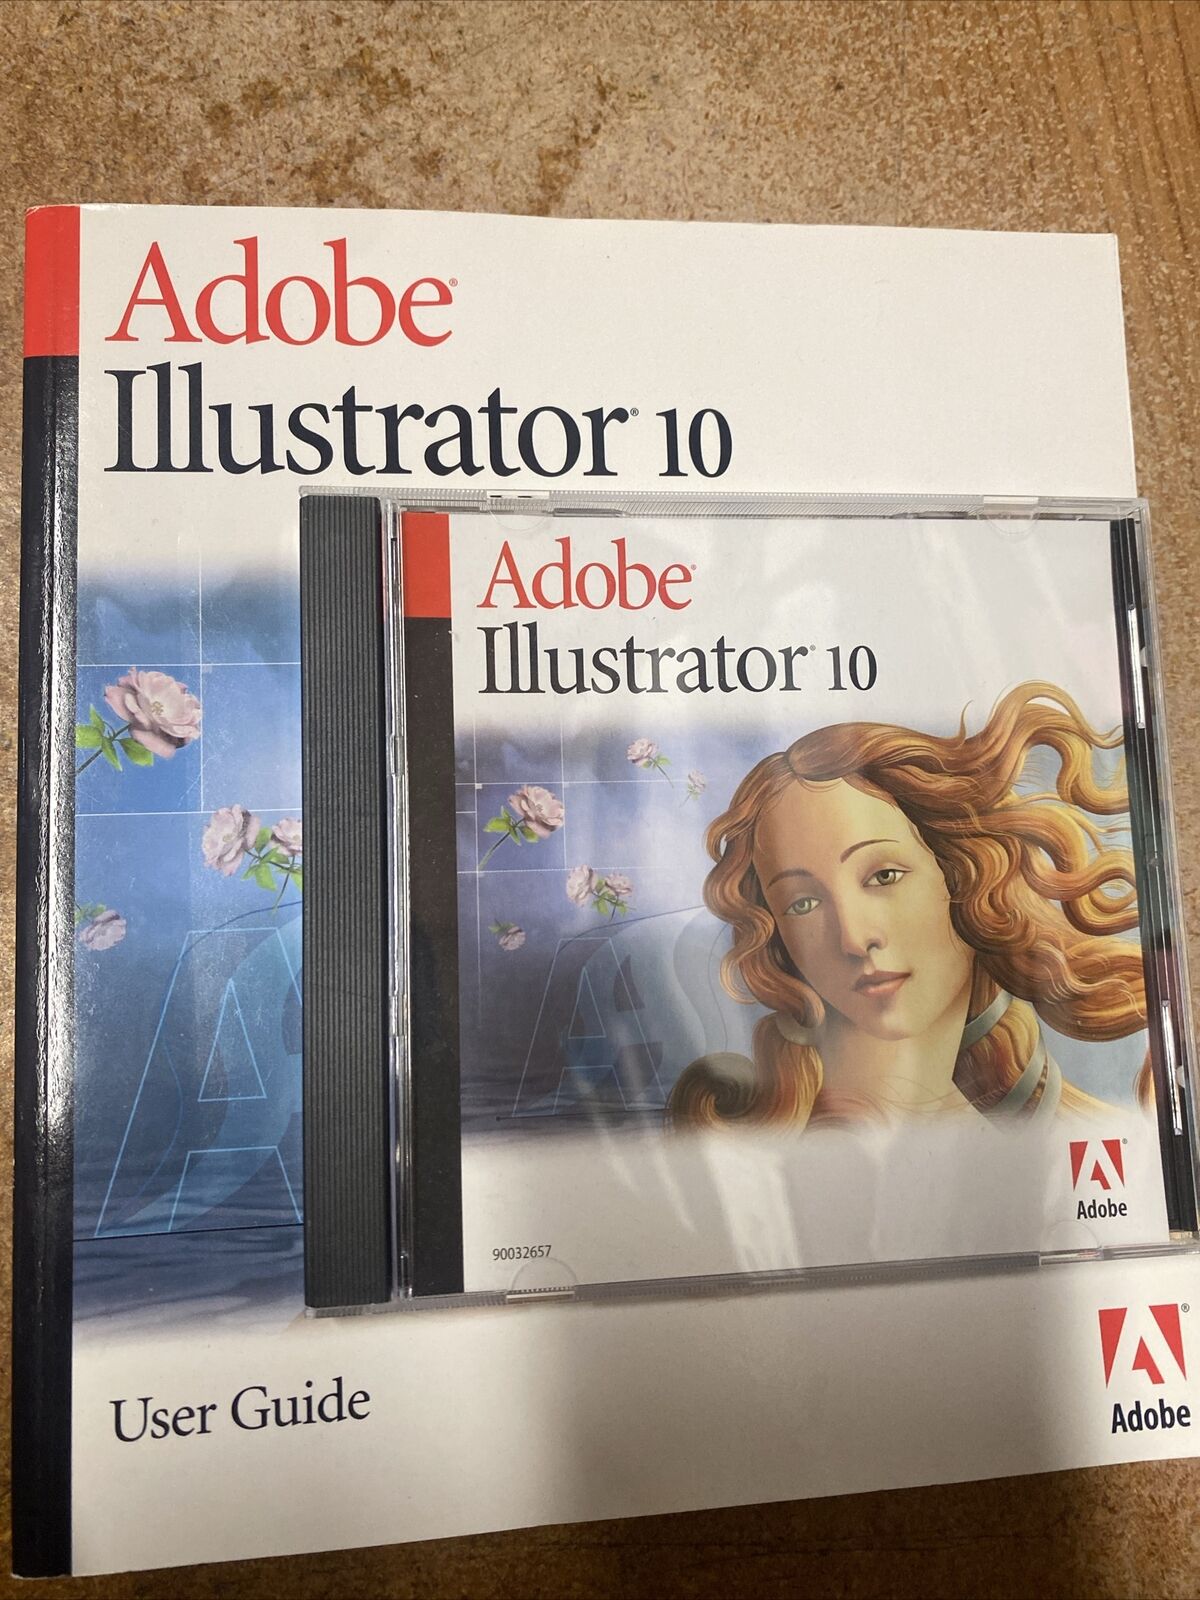 Adobe Illustrator 10 Windows Full Retail with Serial Number